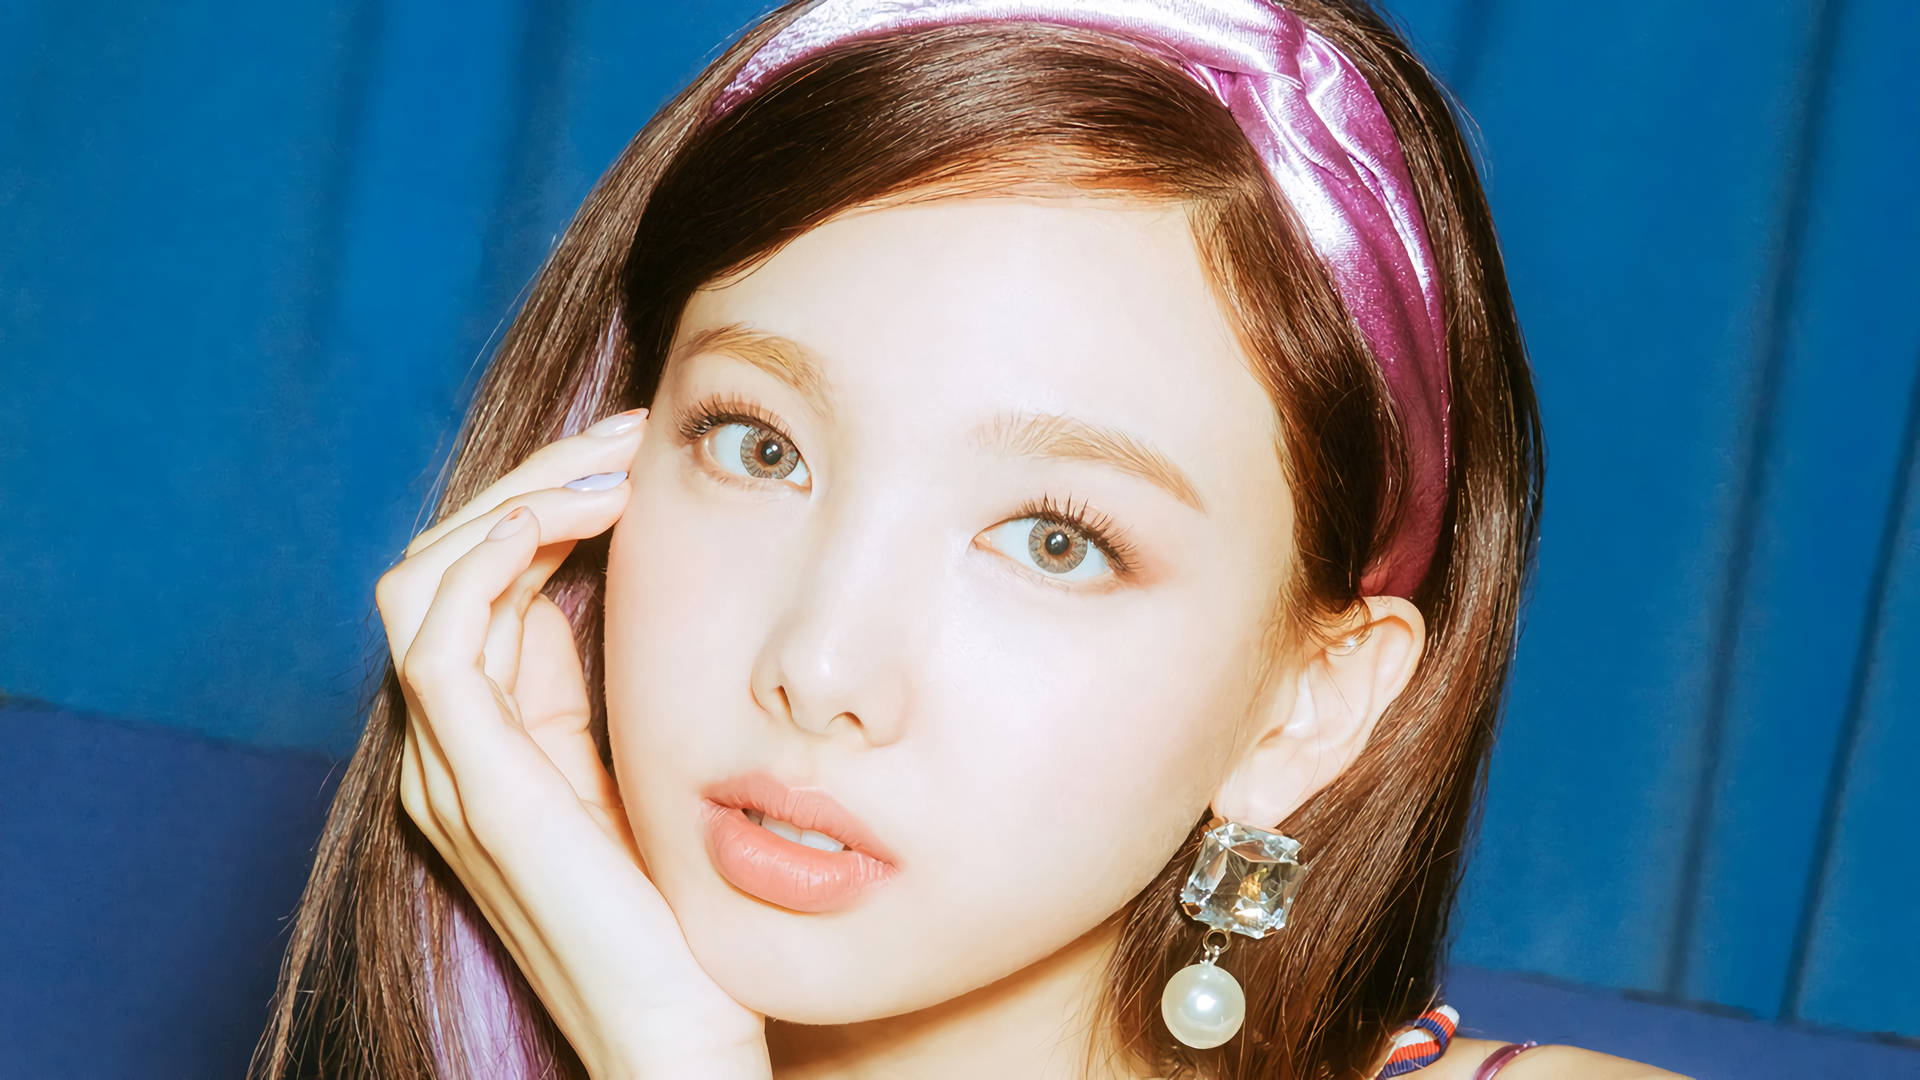 Twice Nayeon In Purple Headband Close-up Wallpaper